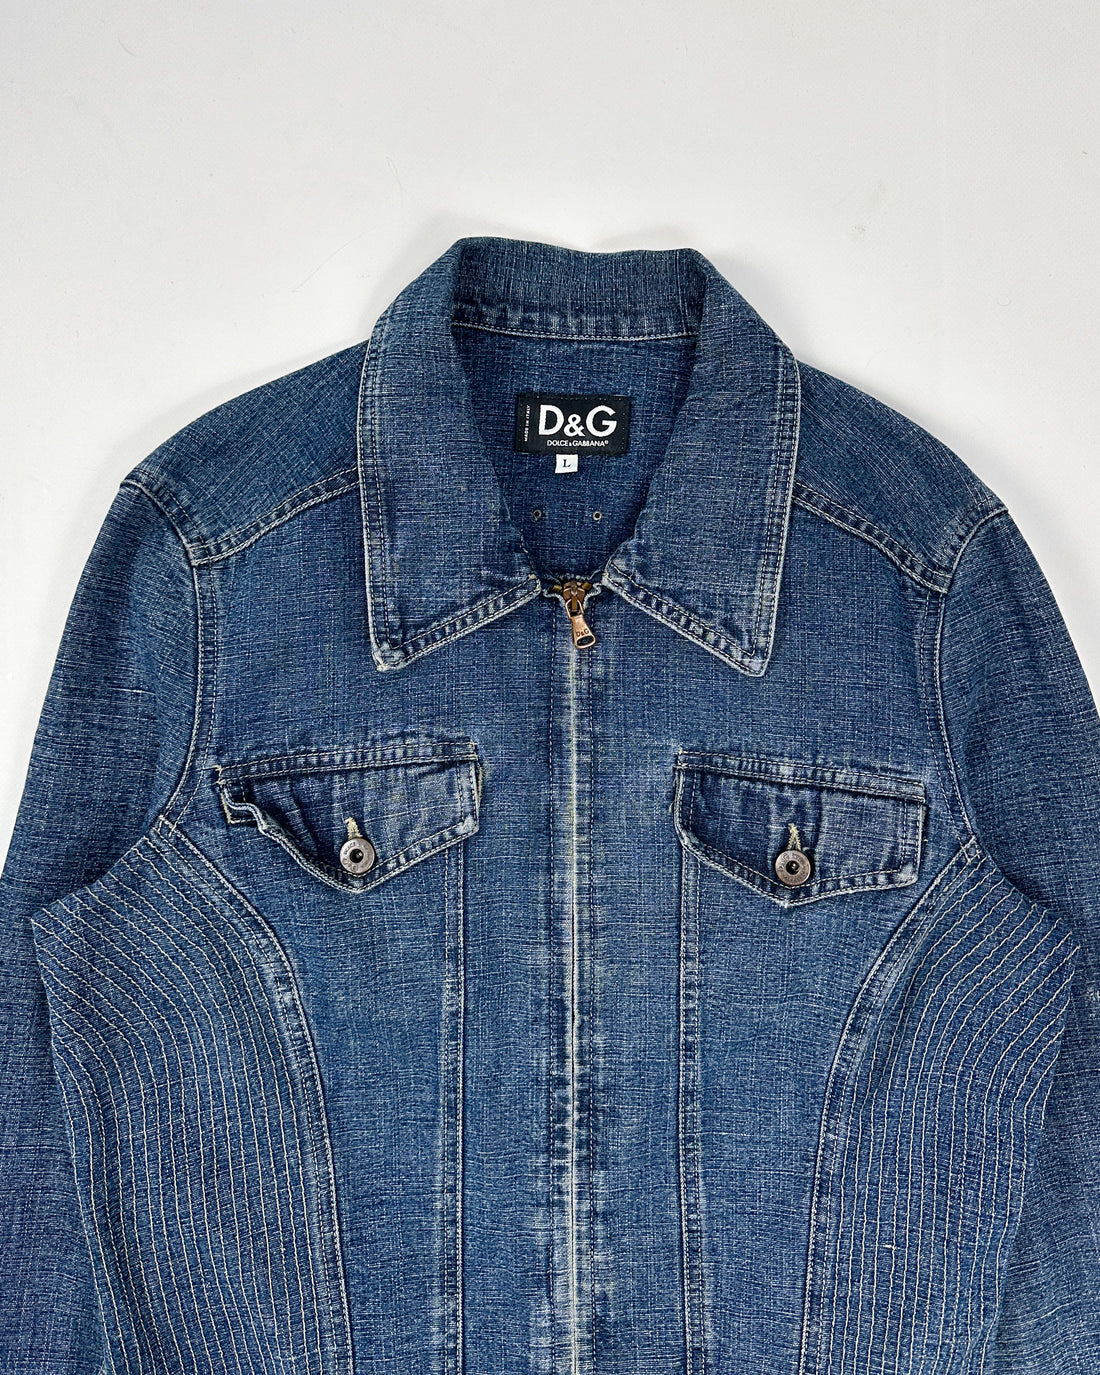 Dolce & Gabbana Stitched Denim Jacket 1990's